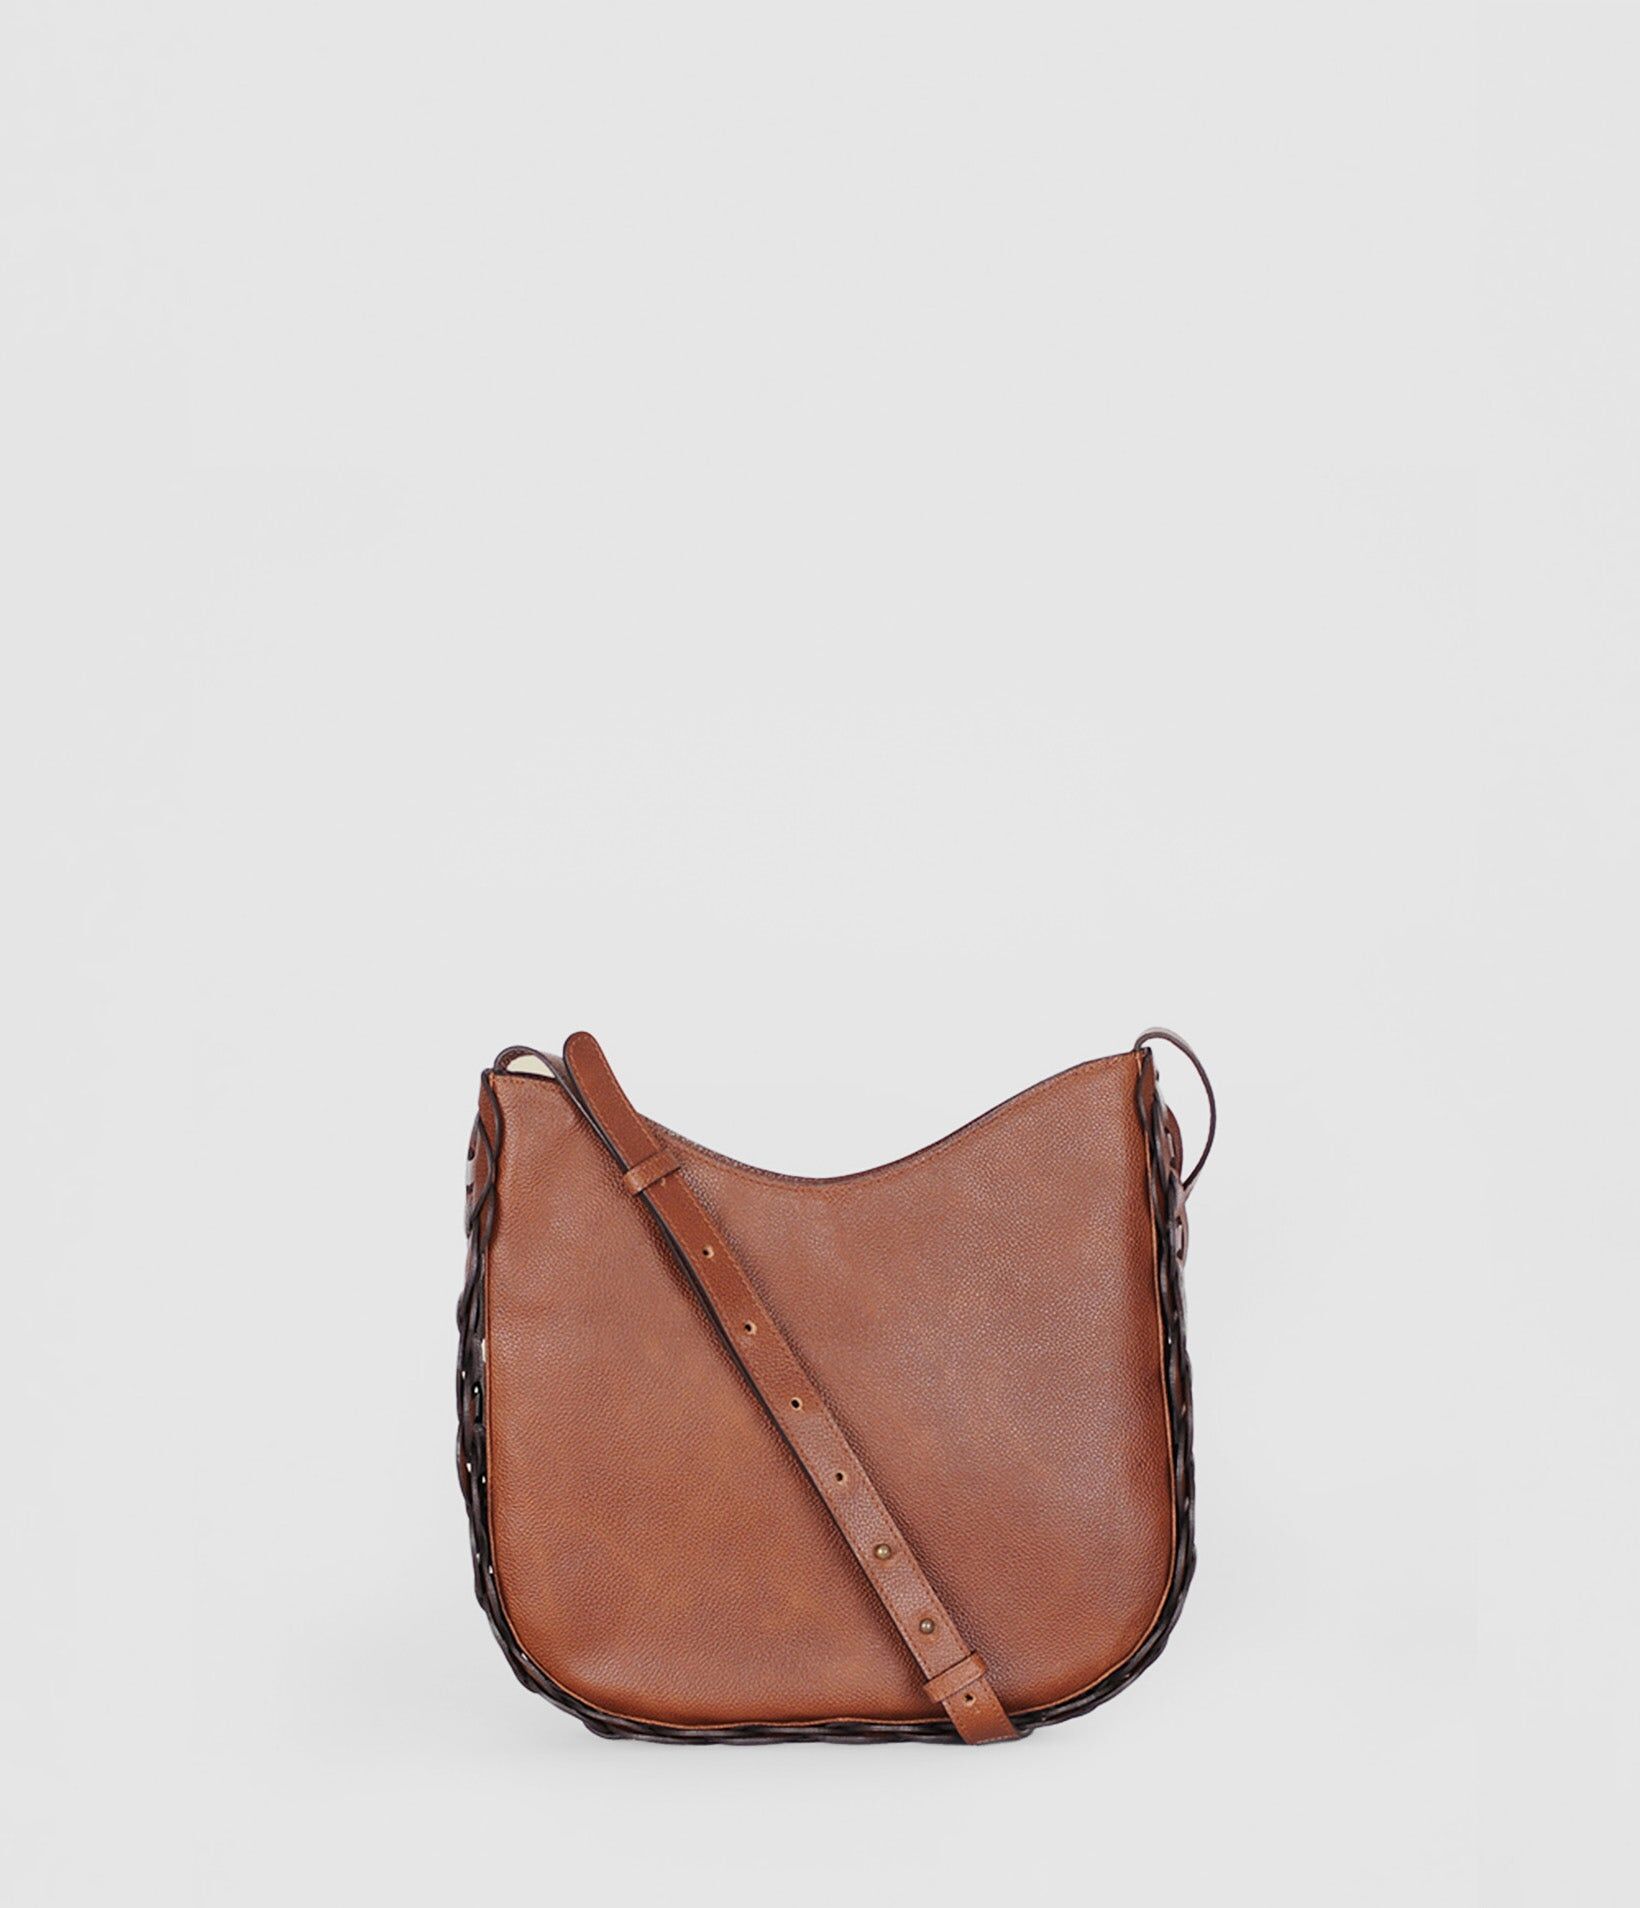 Wilsons Leather   Women's Mila Crossbody Bag   Tan